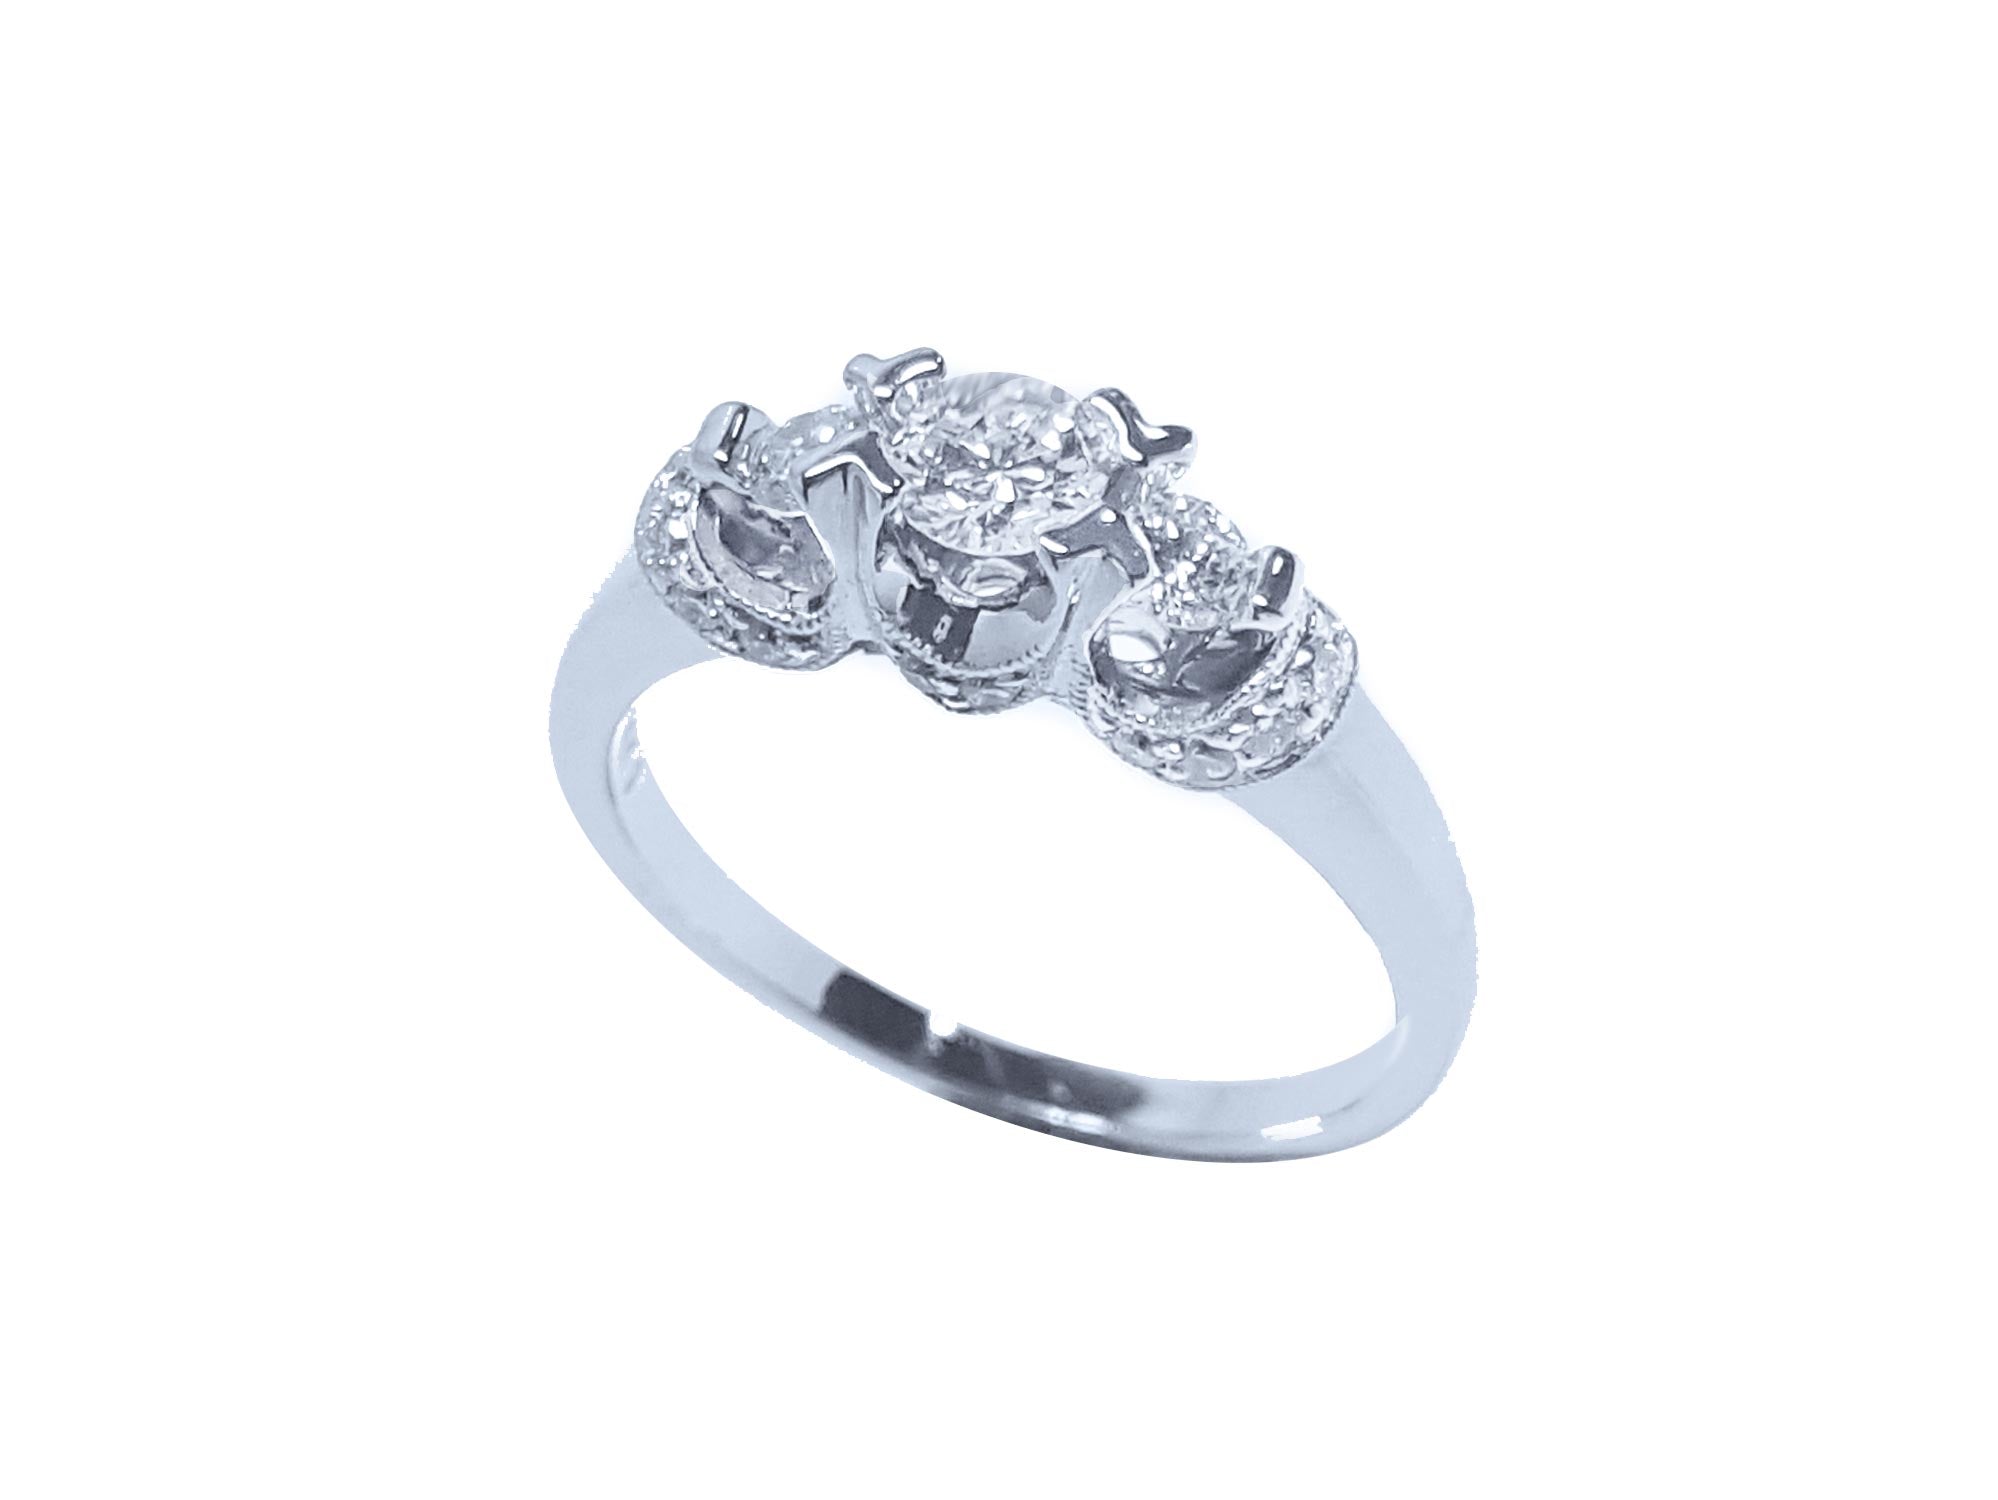 Bridal diamond engagement ring